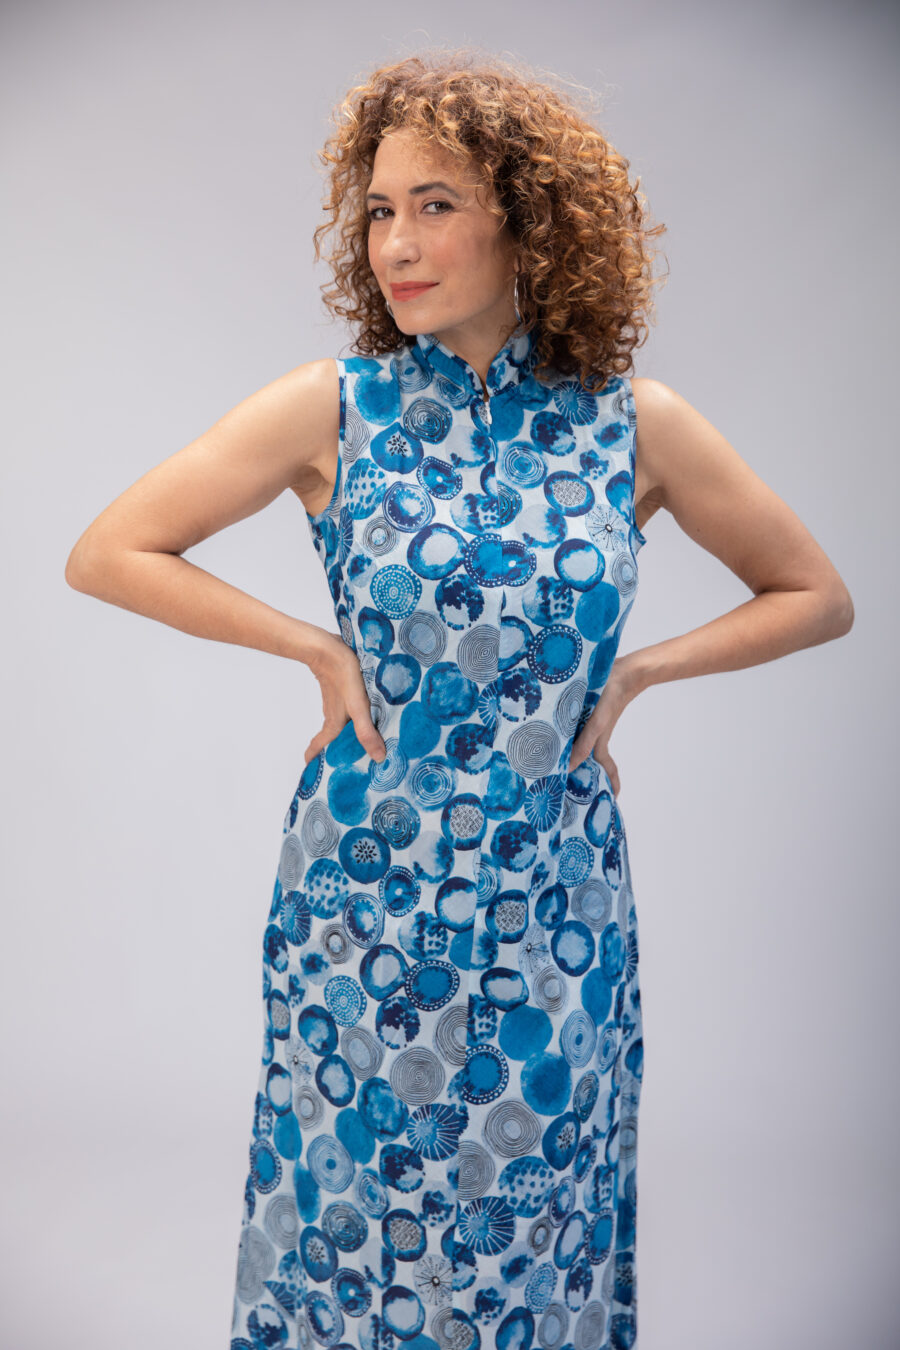 Ossi dress – Uniquely designed dress – Ocean print, white dress with blue sphere print.